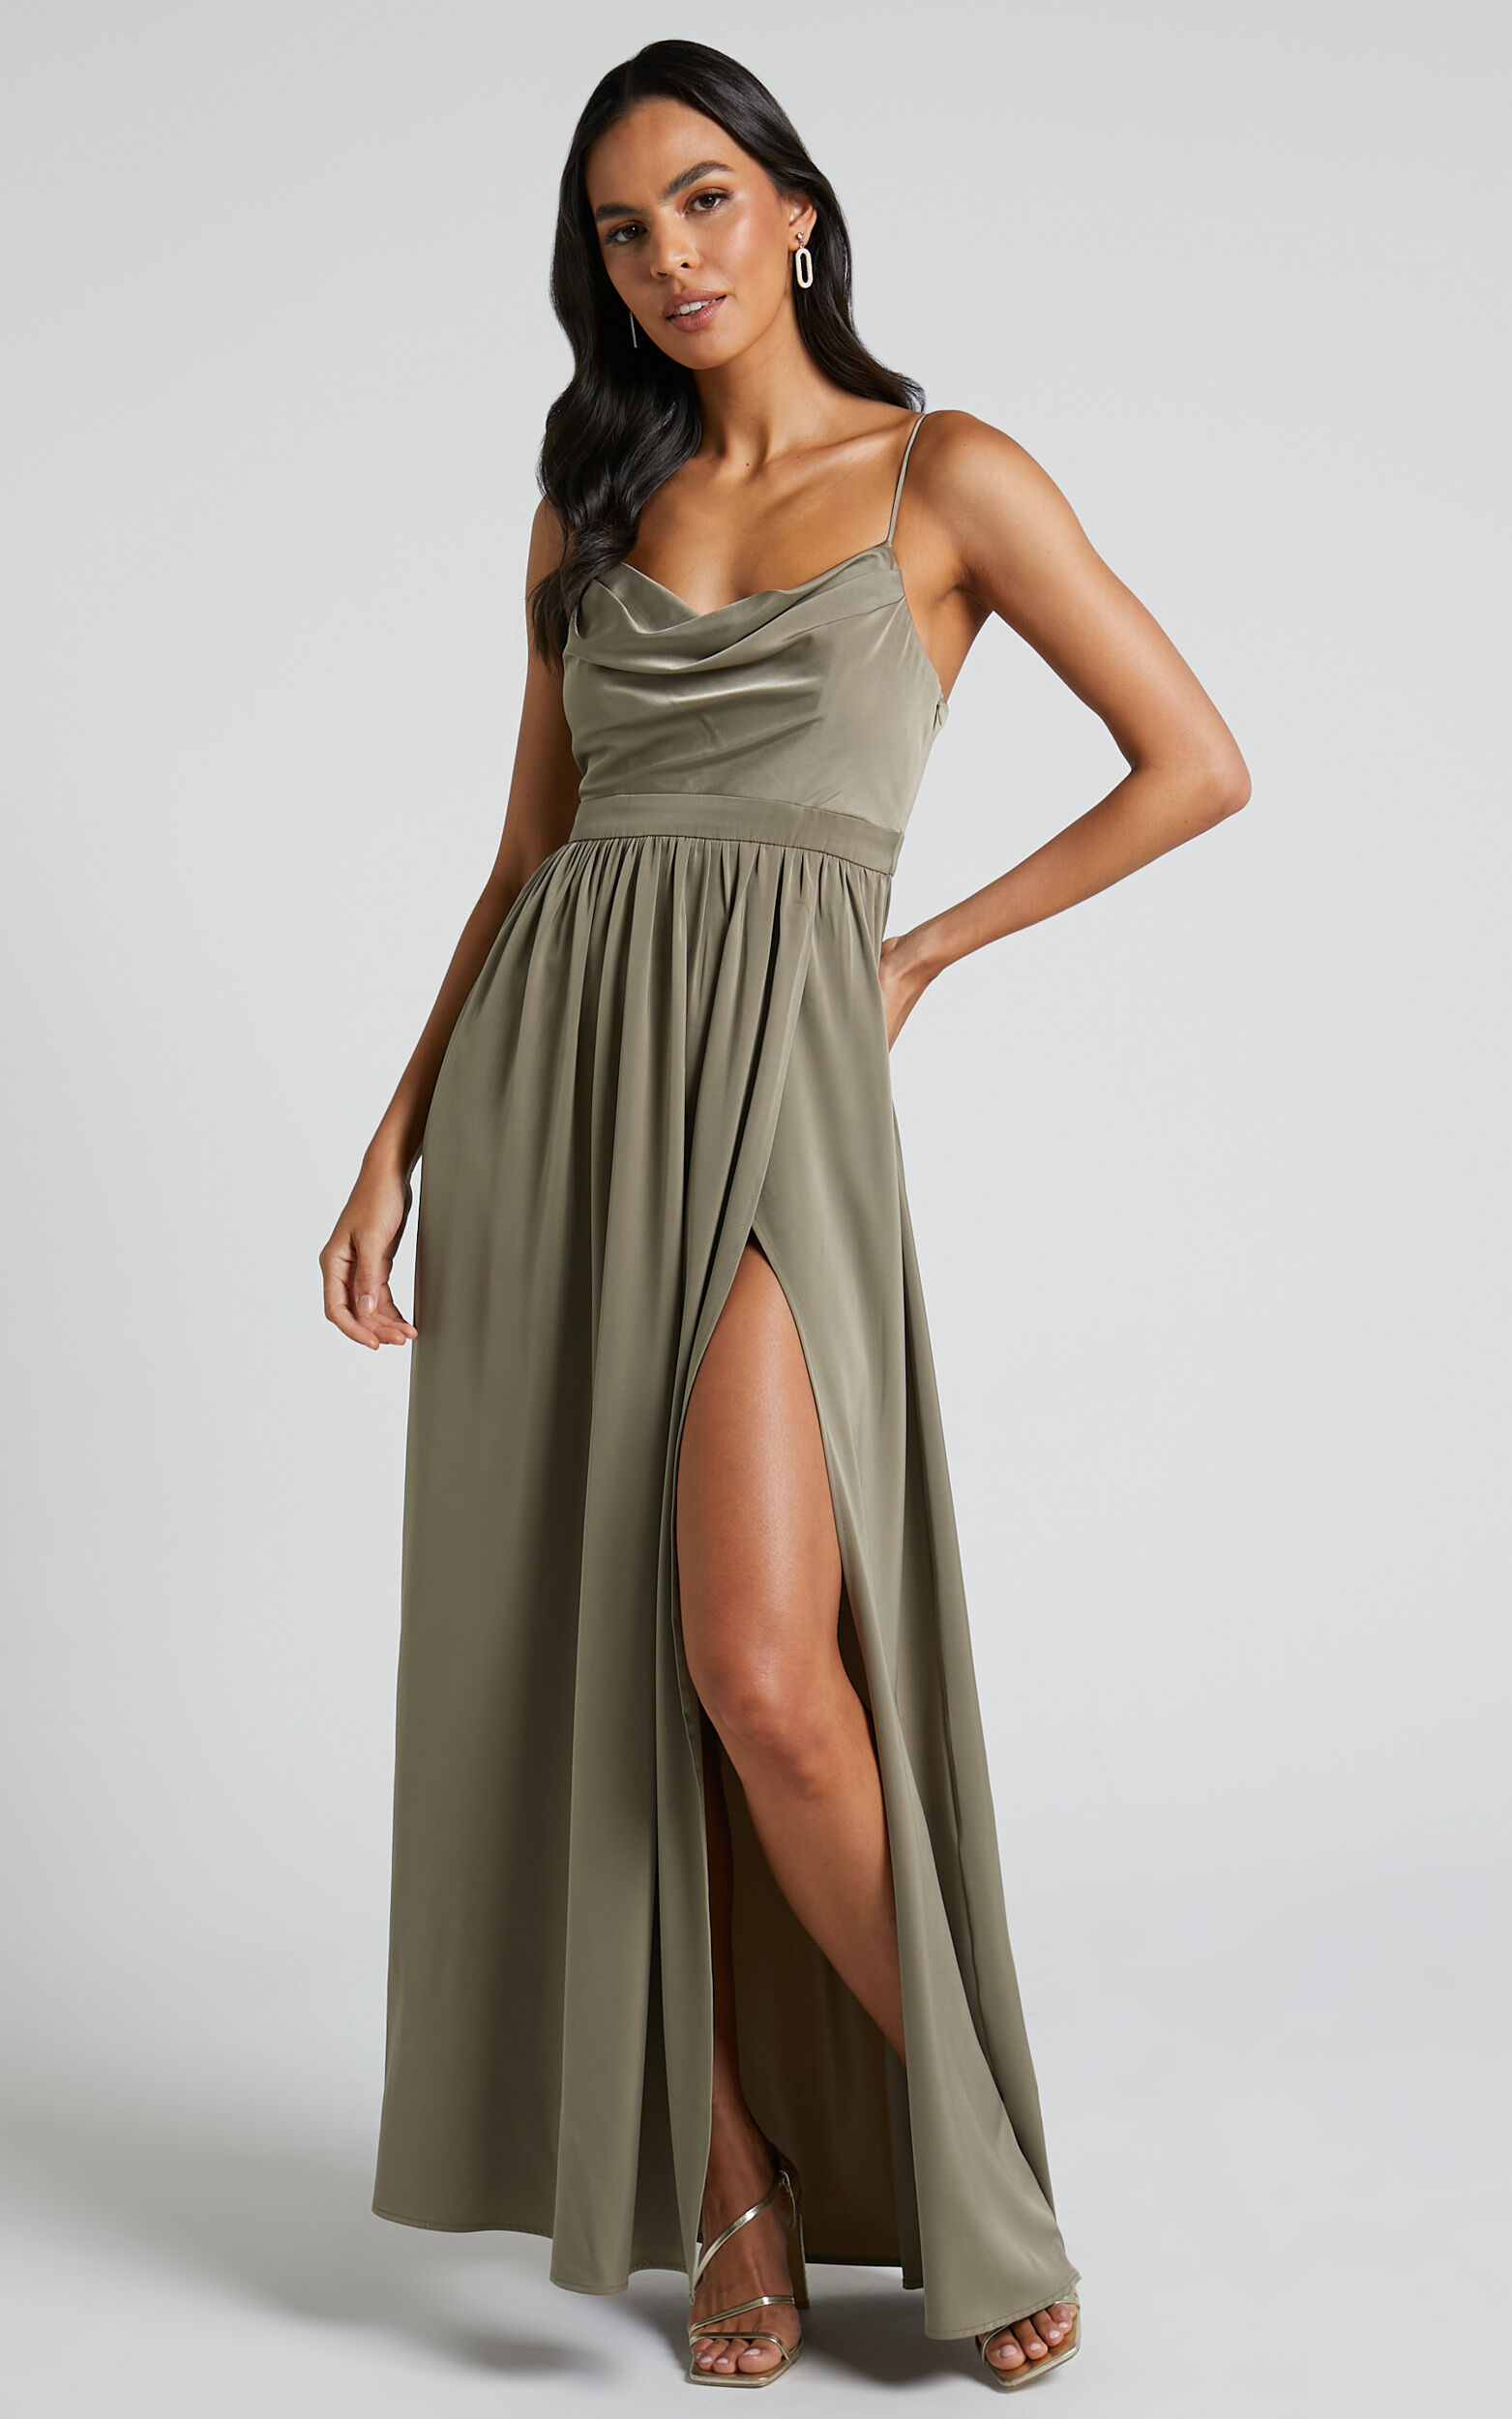 Gemalyn Maxi Dress - Cowl Neck Thigh Split Dress in Olive - 04, GRN1